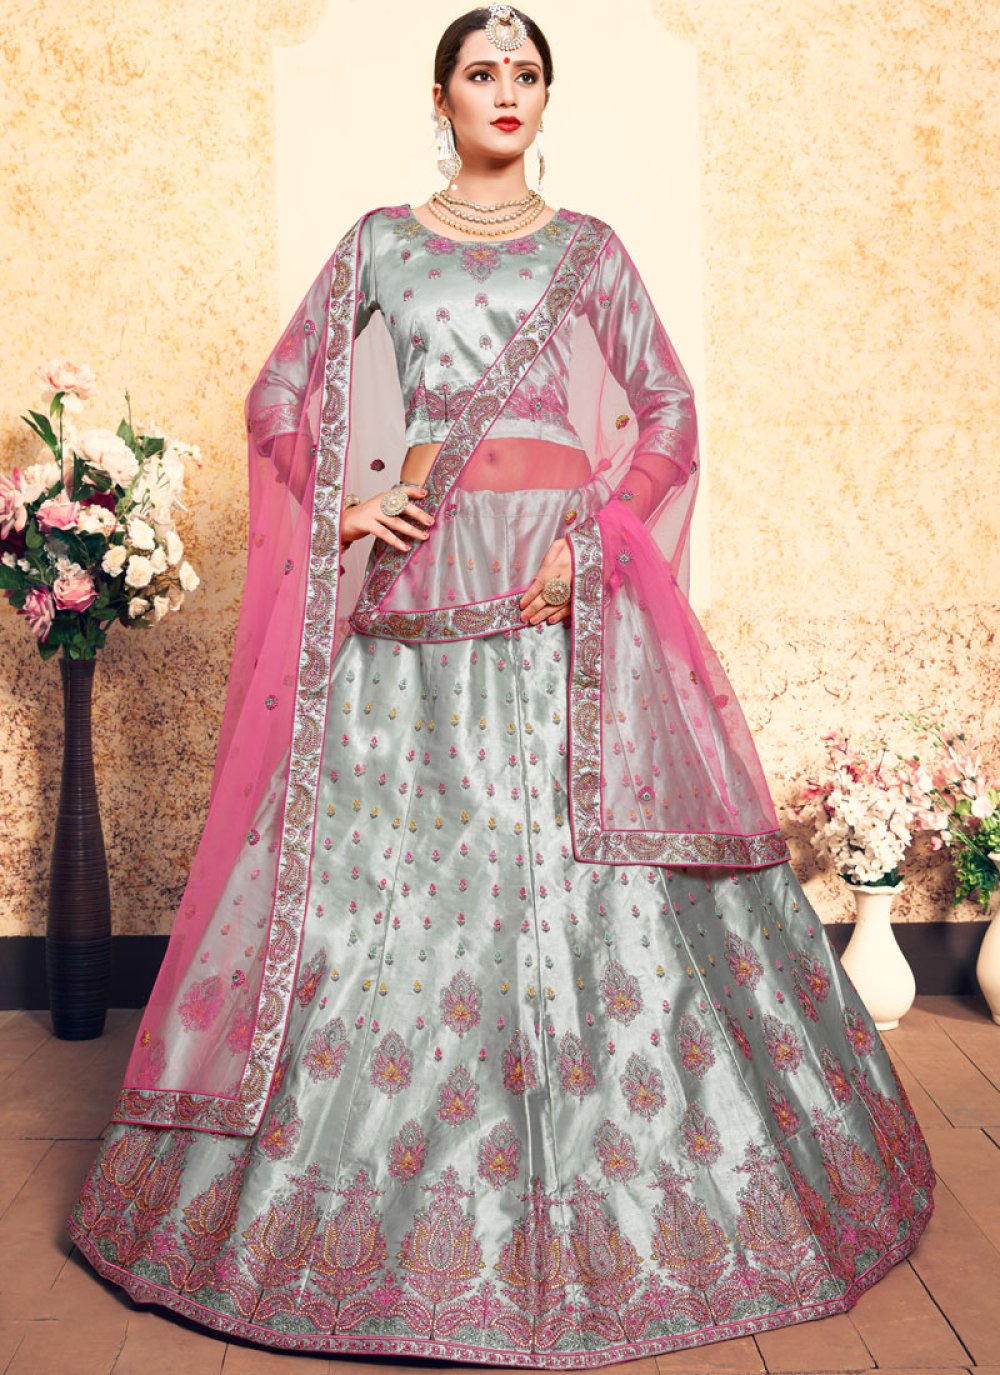 Buy Grey color net designer Indian wedding lehenga in UK, USA and Canada |  Indian bridal dress, Indian wedding gowns, Indian wedding lehenga